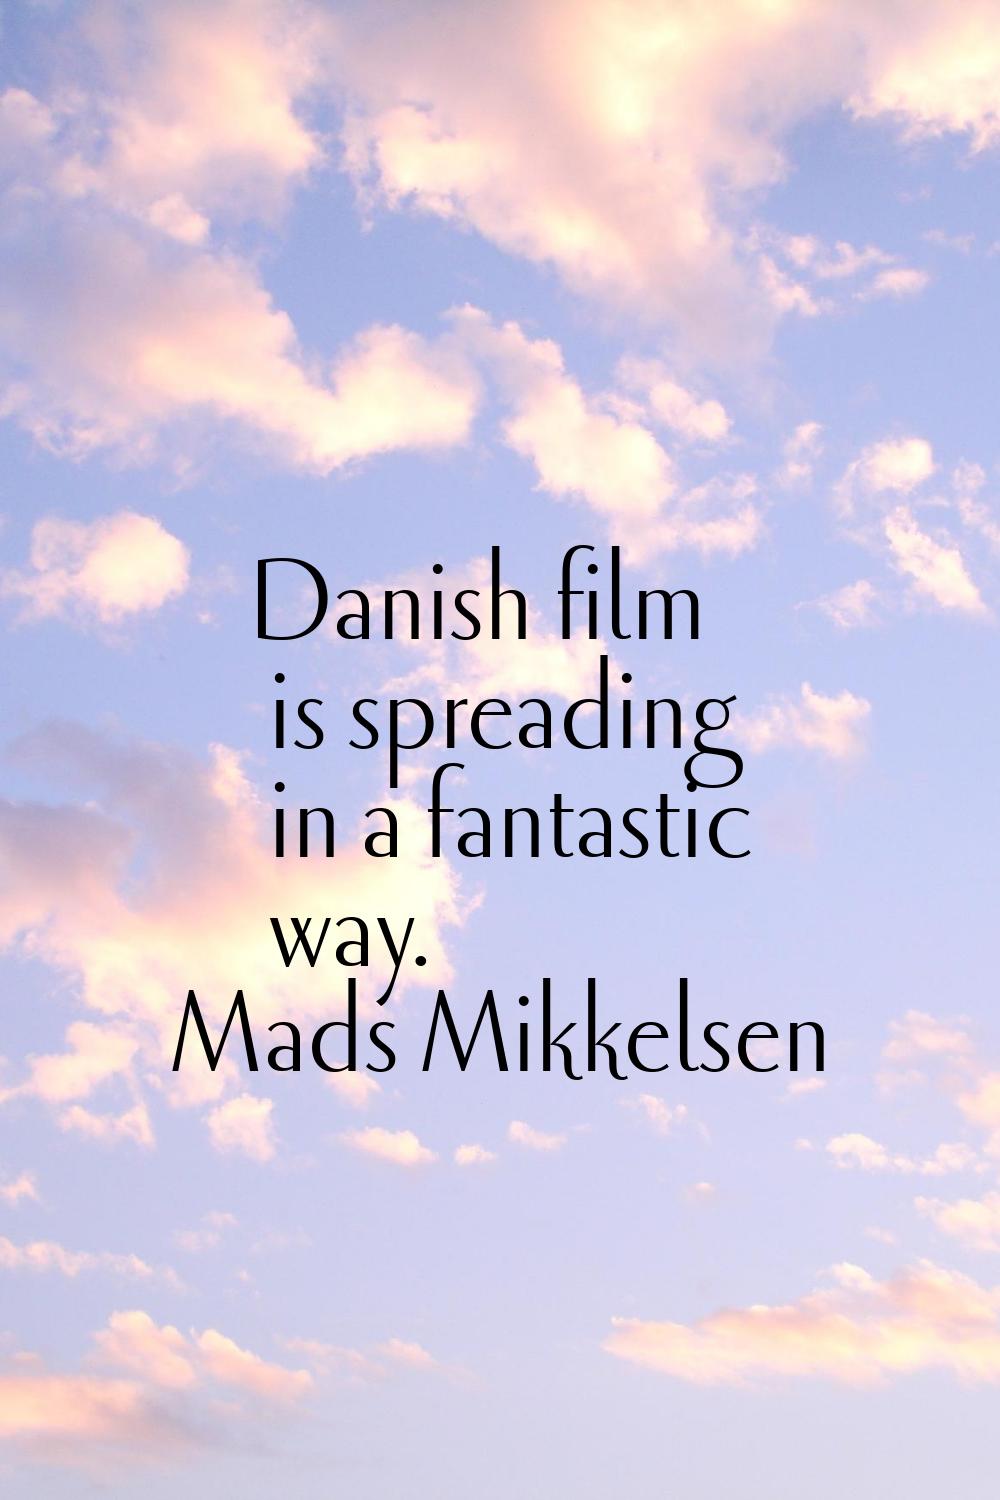 Danish film is spreading in a fantastic way.